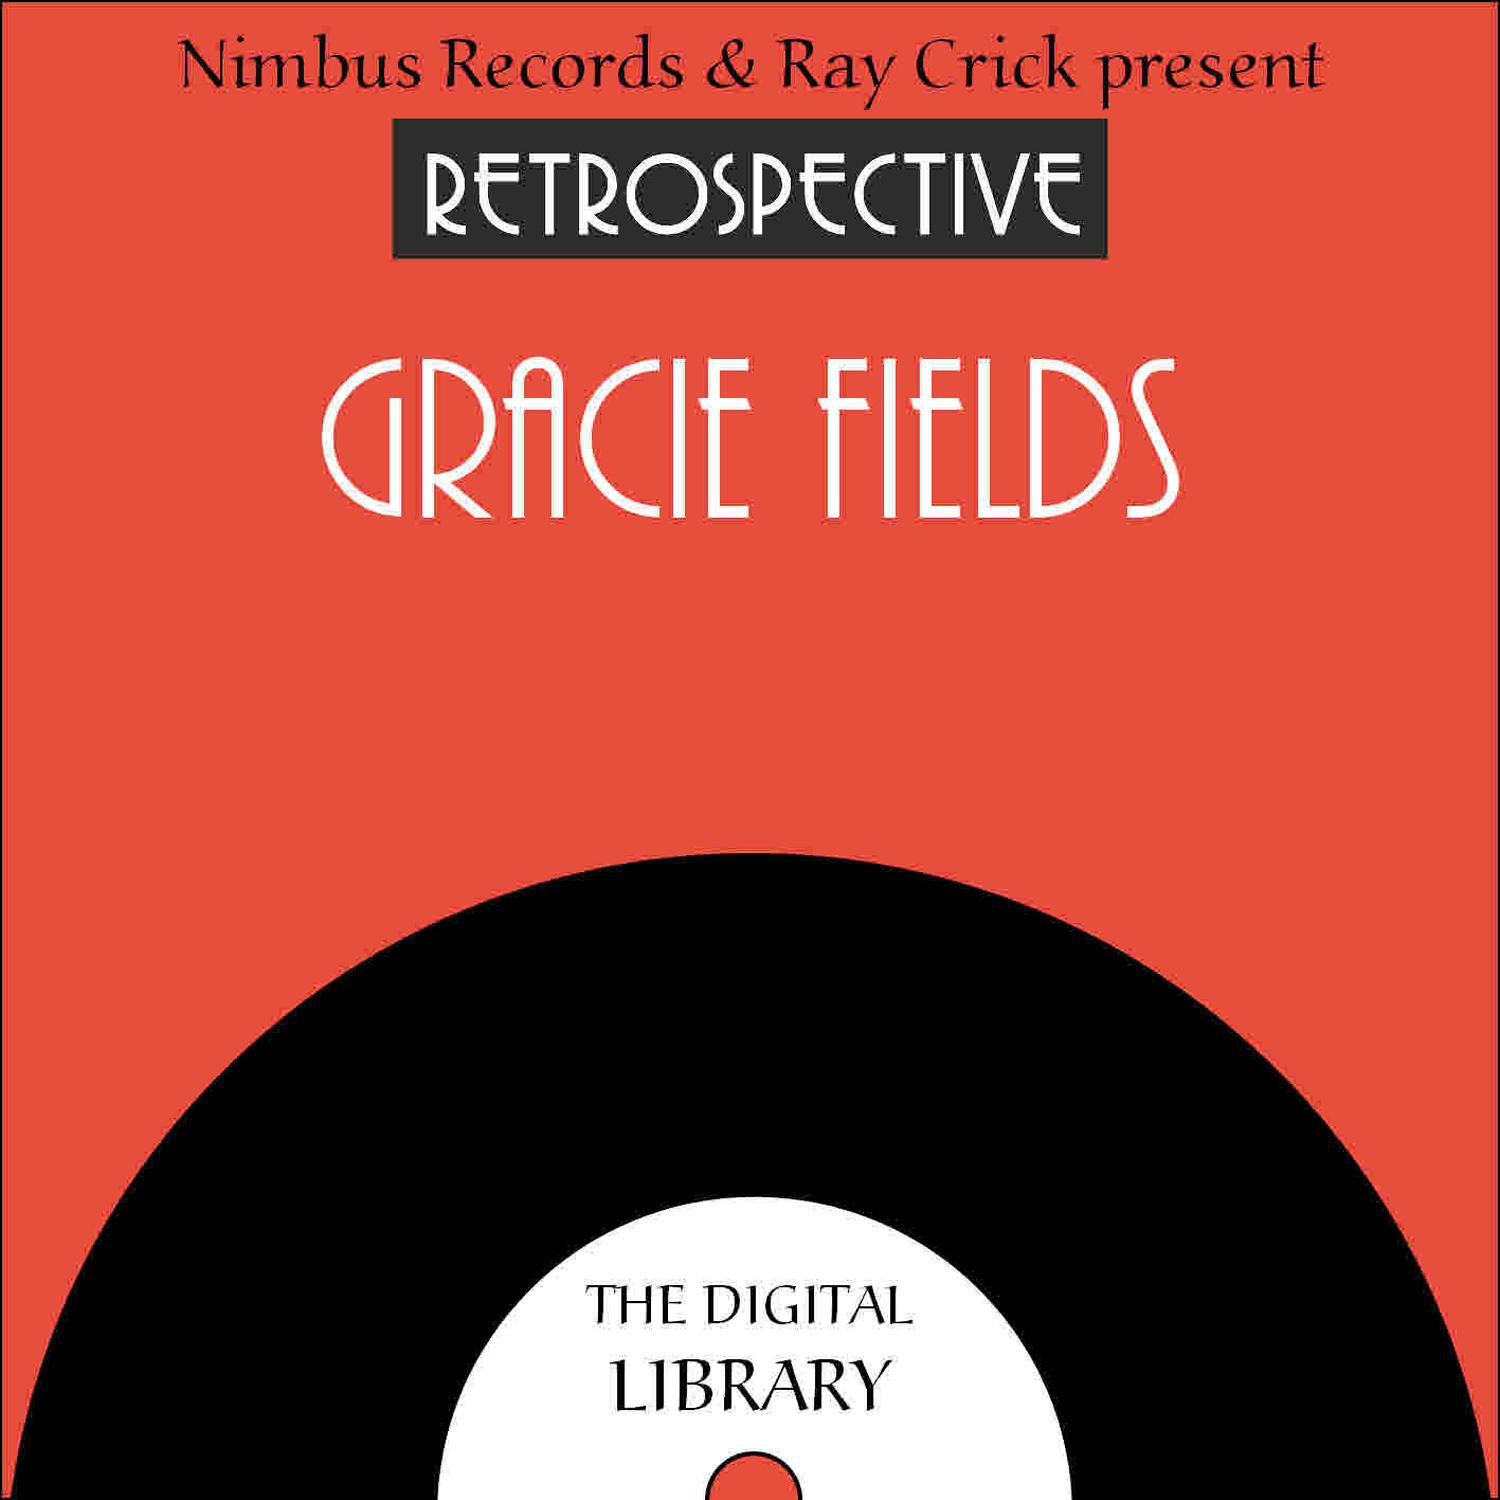 A Retrospective Gracie Fields